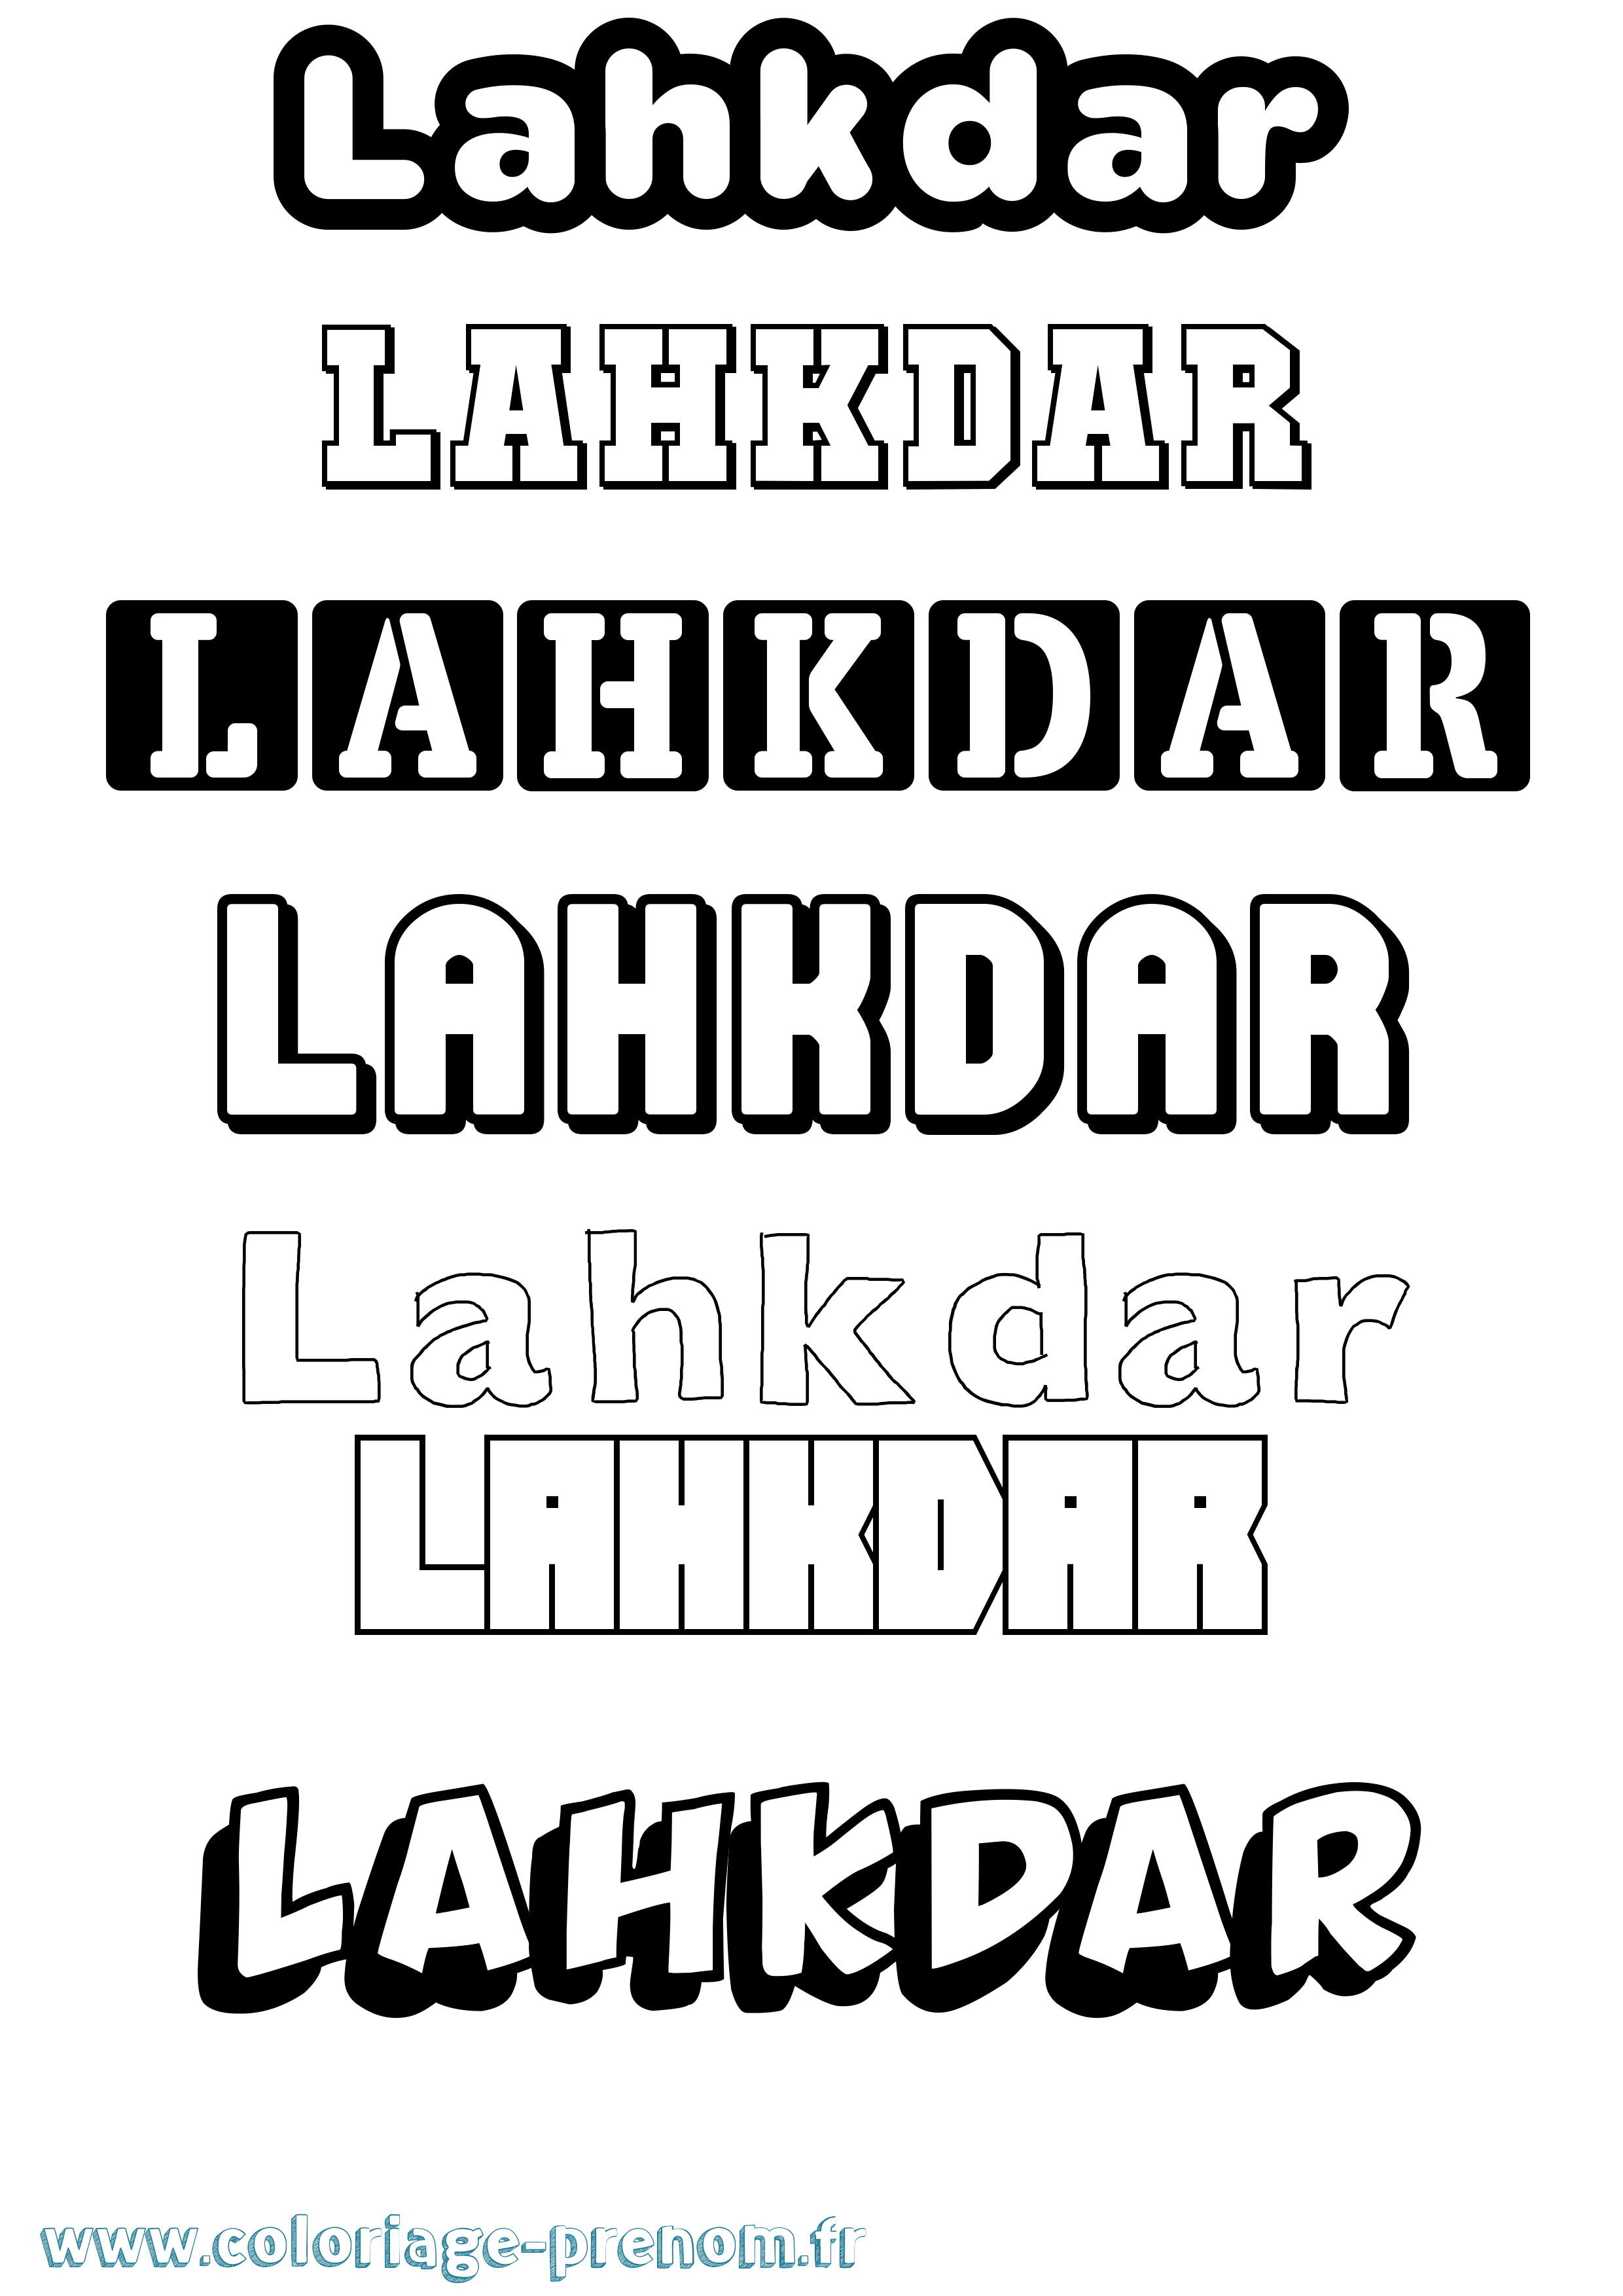 Coloriage prénom Lahkdar Simple